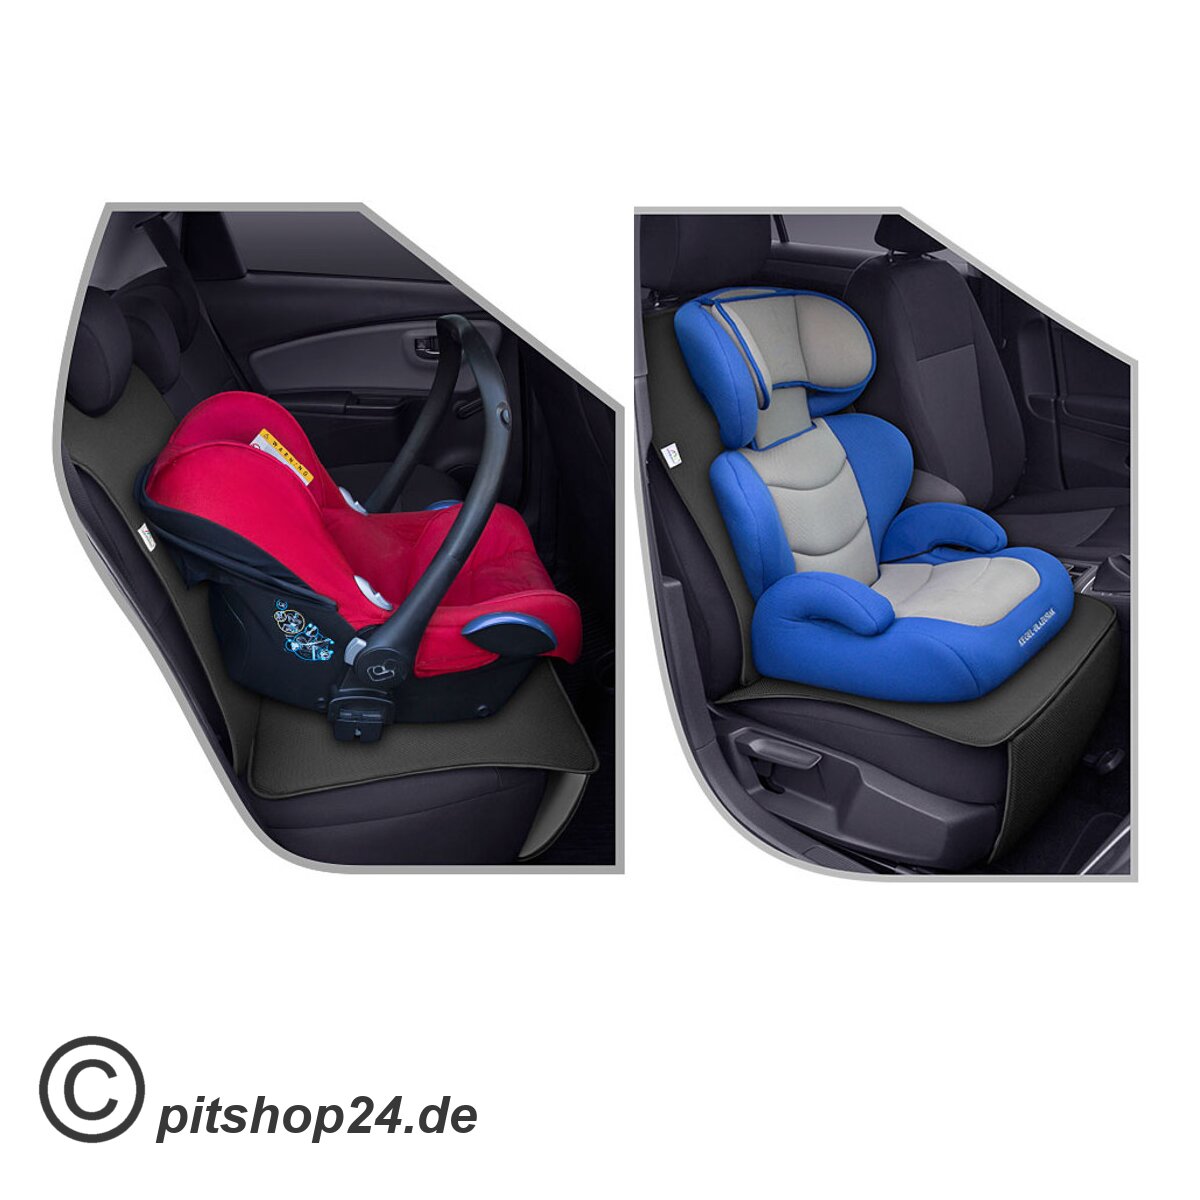 Clamaro Autositzschoner Kindersitz Rückenlehnenschutz Unterlage  Autositzauflage Sitzschoner,Autokindersitz